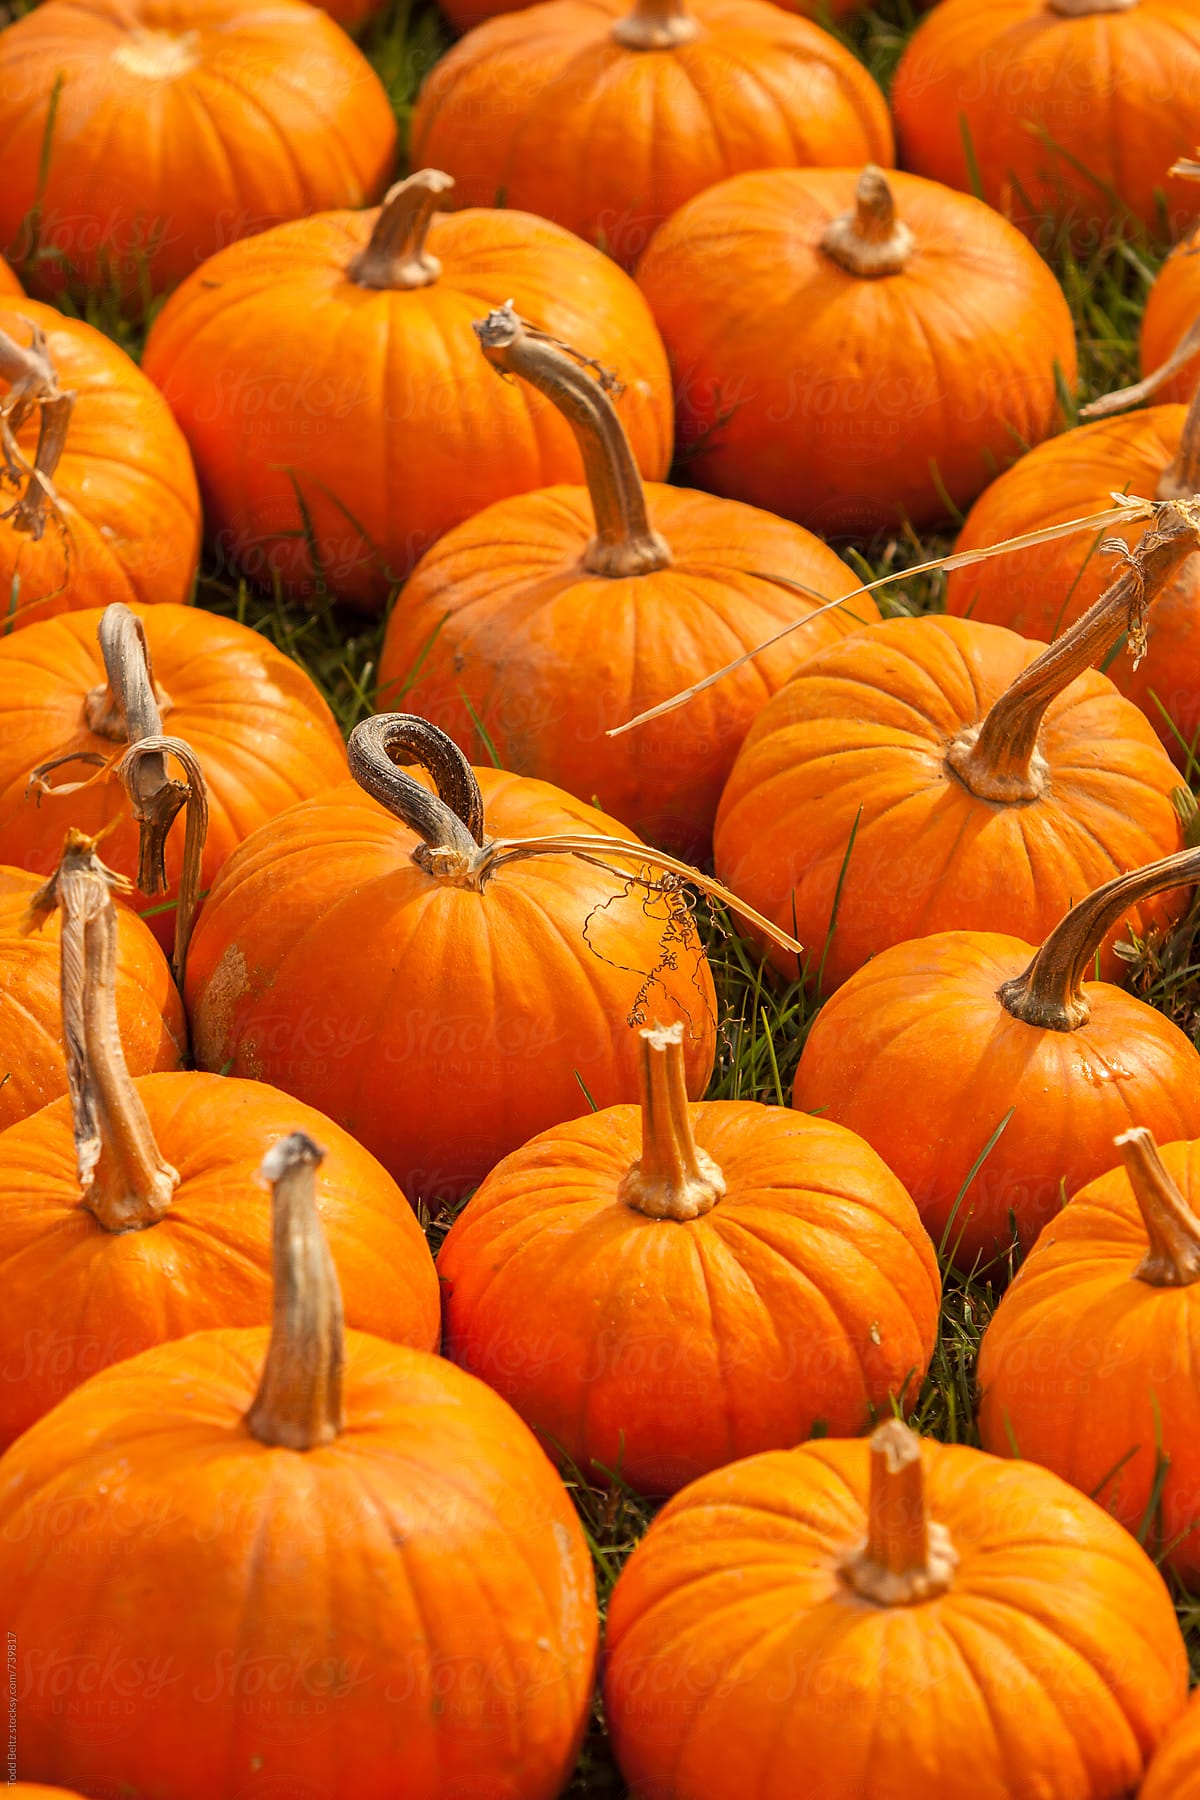 Portrait shot of pumpkins in a pumpkin patch